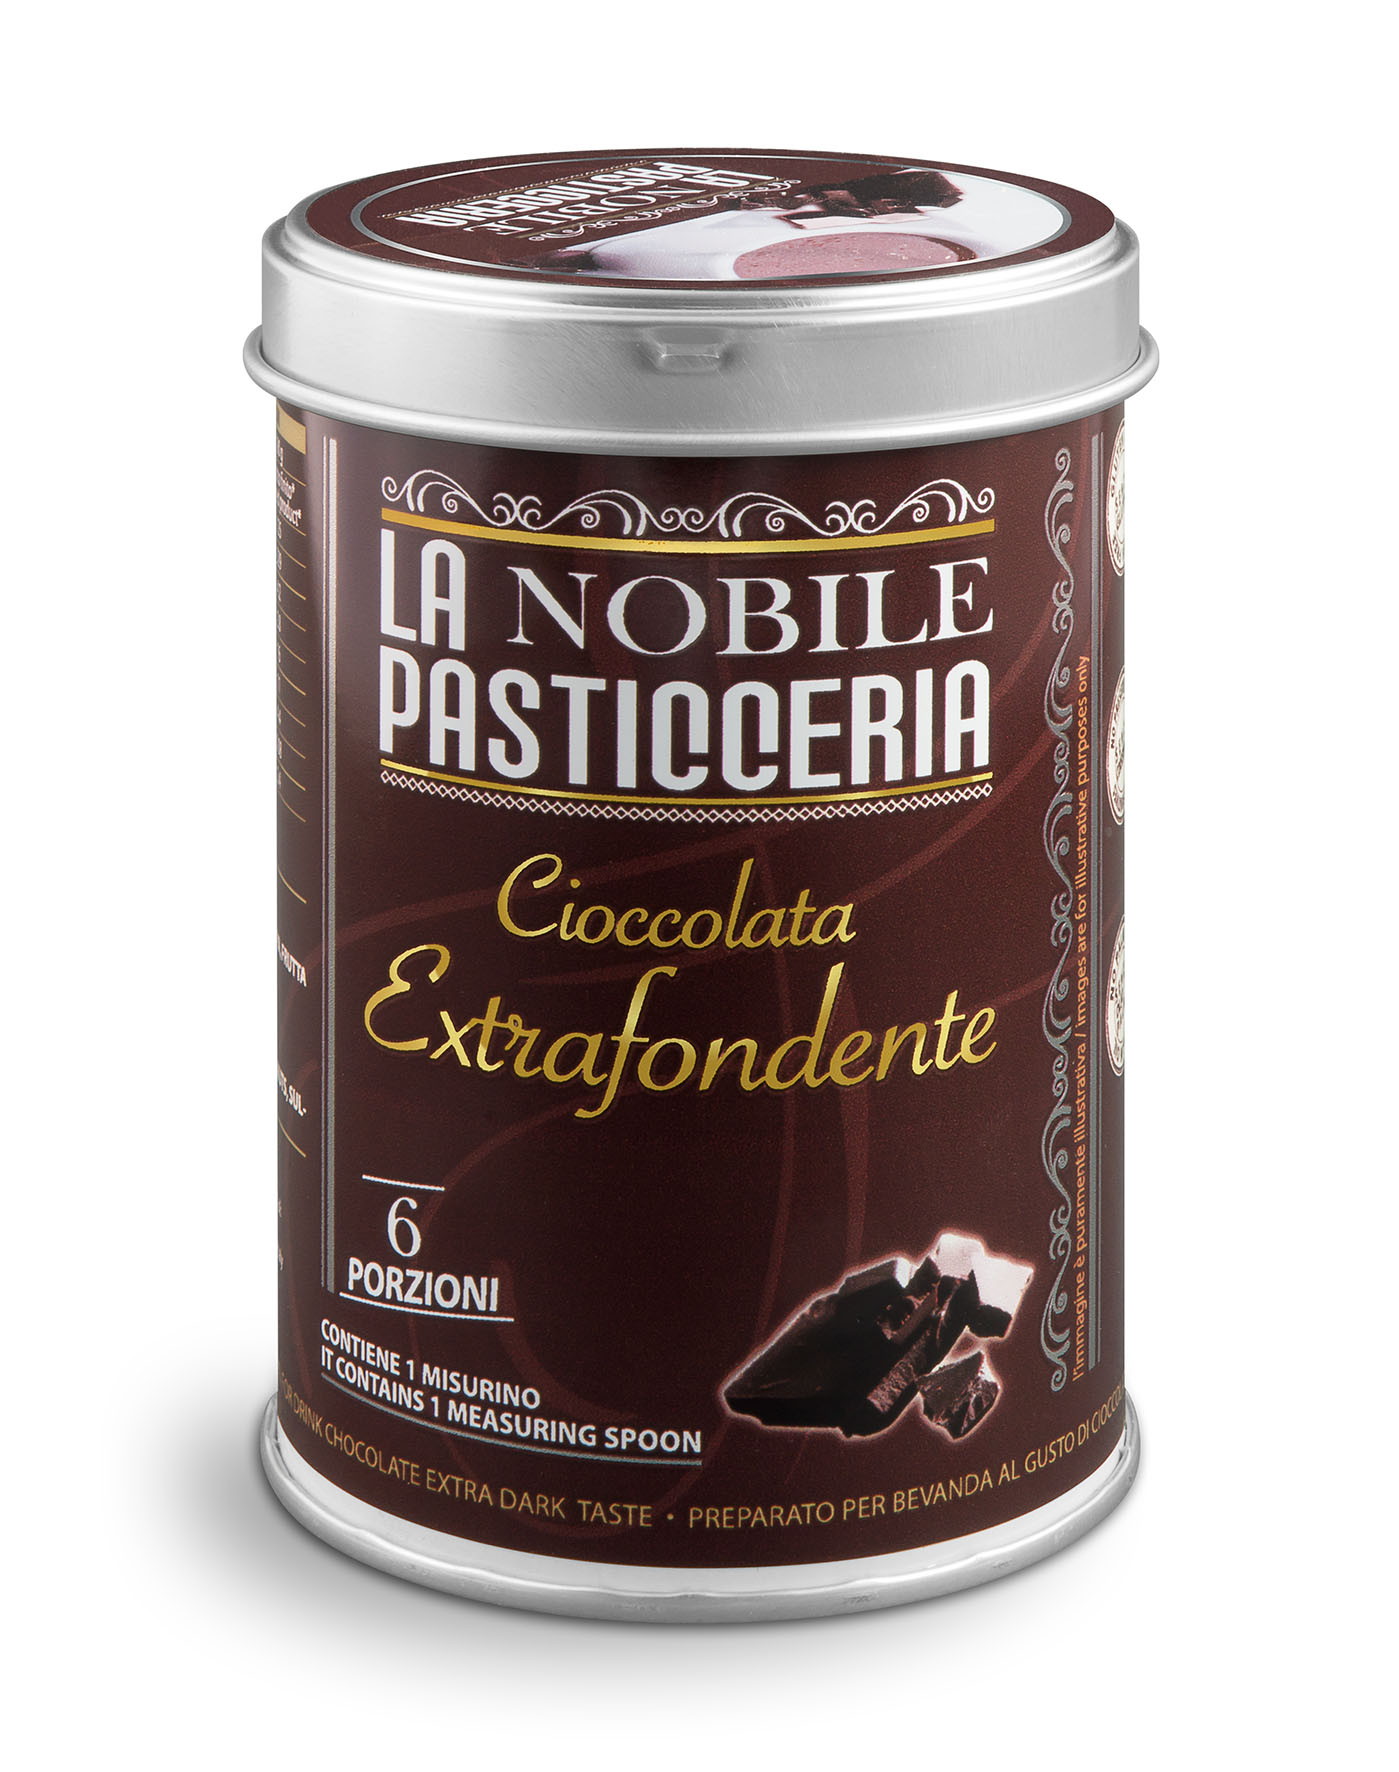 La Nobile Pasticceria - Cioccolata Extrafondente